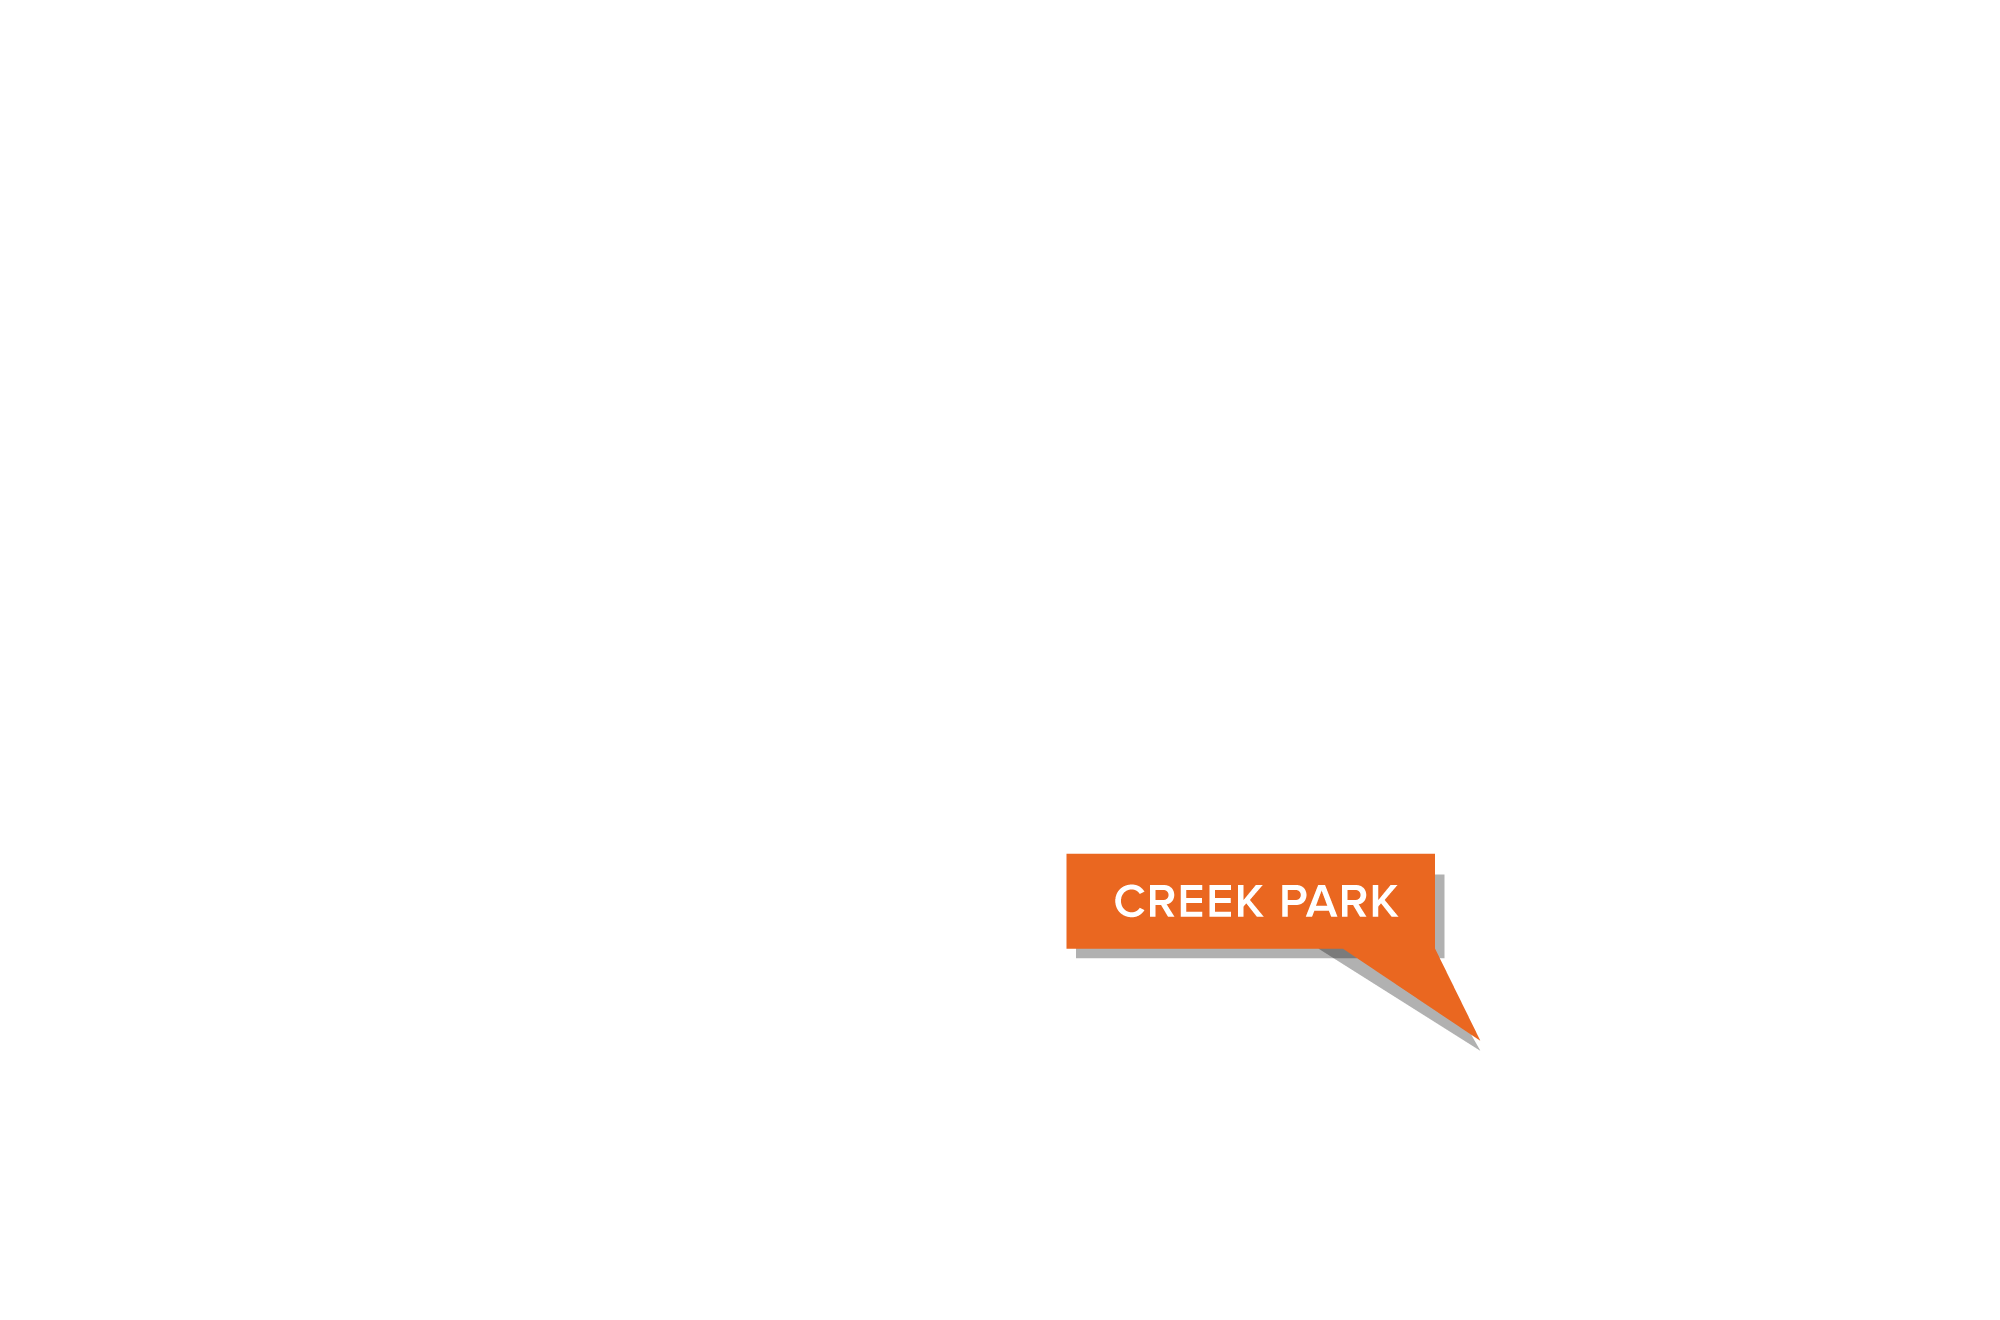 Creek Park